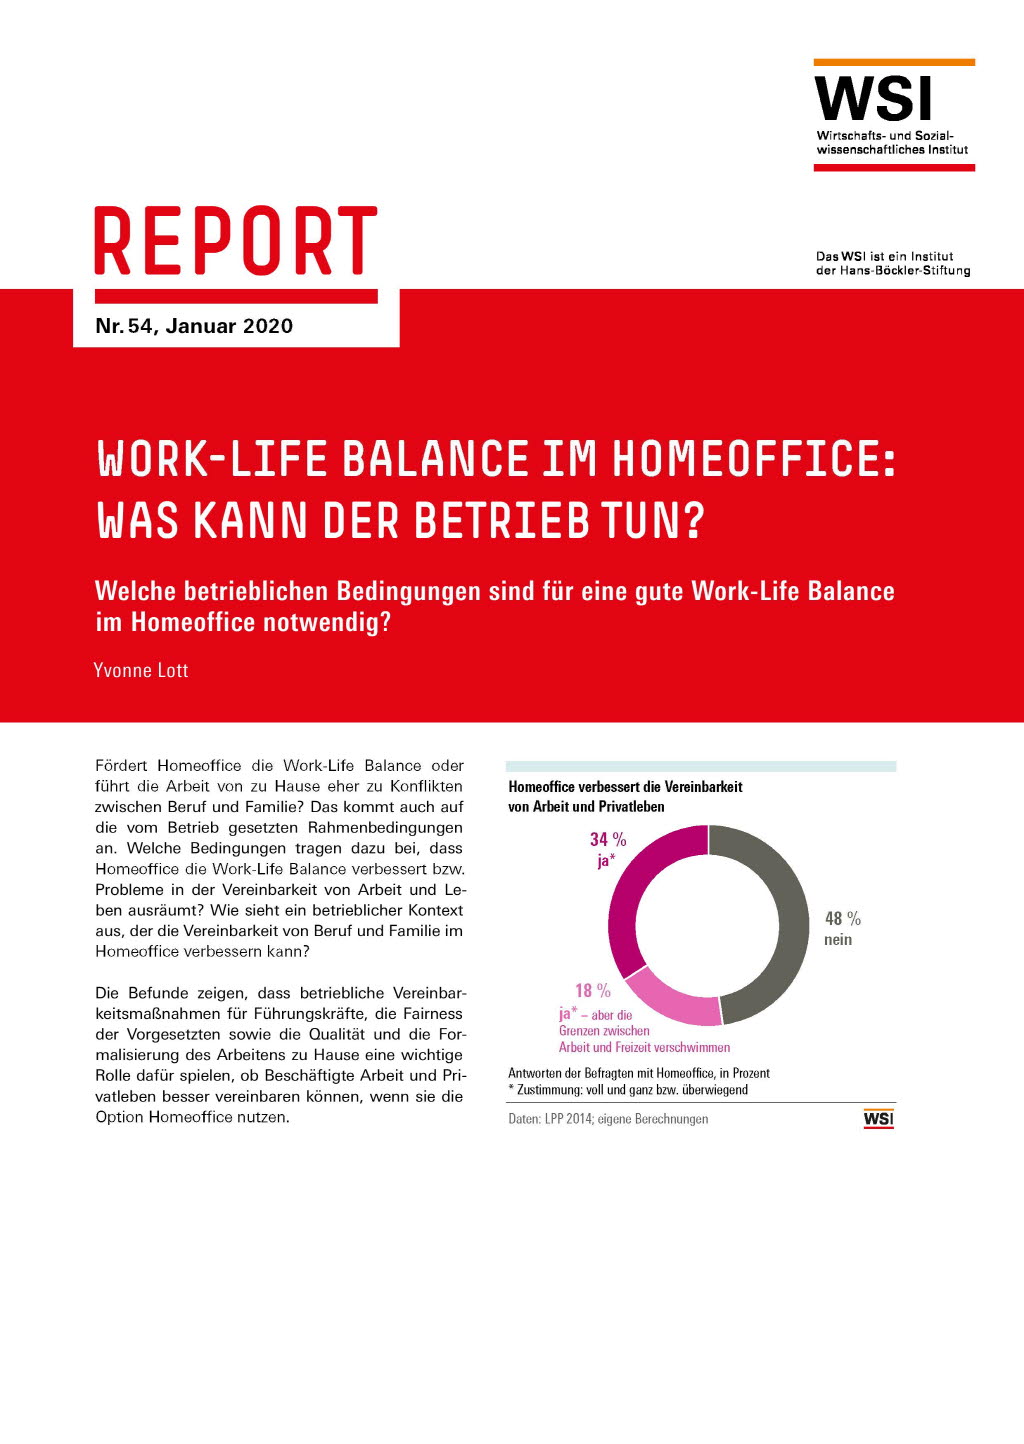 Work-Life Balance im Homeoffice: Was kann der Betrieb tun?